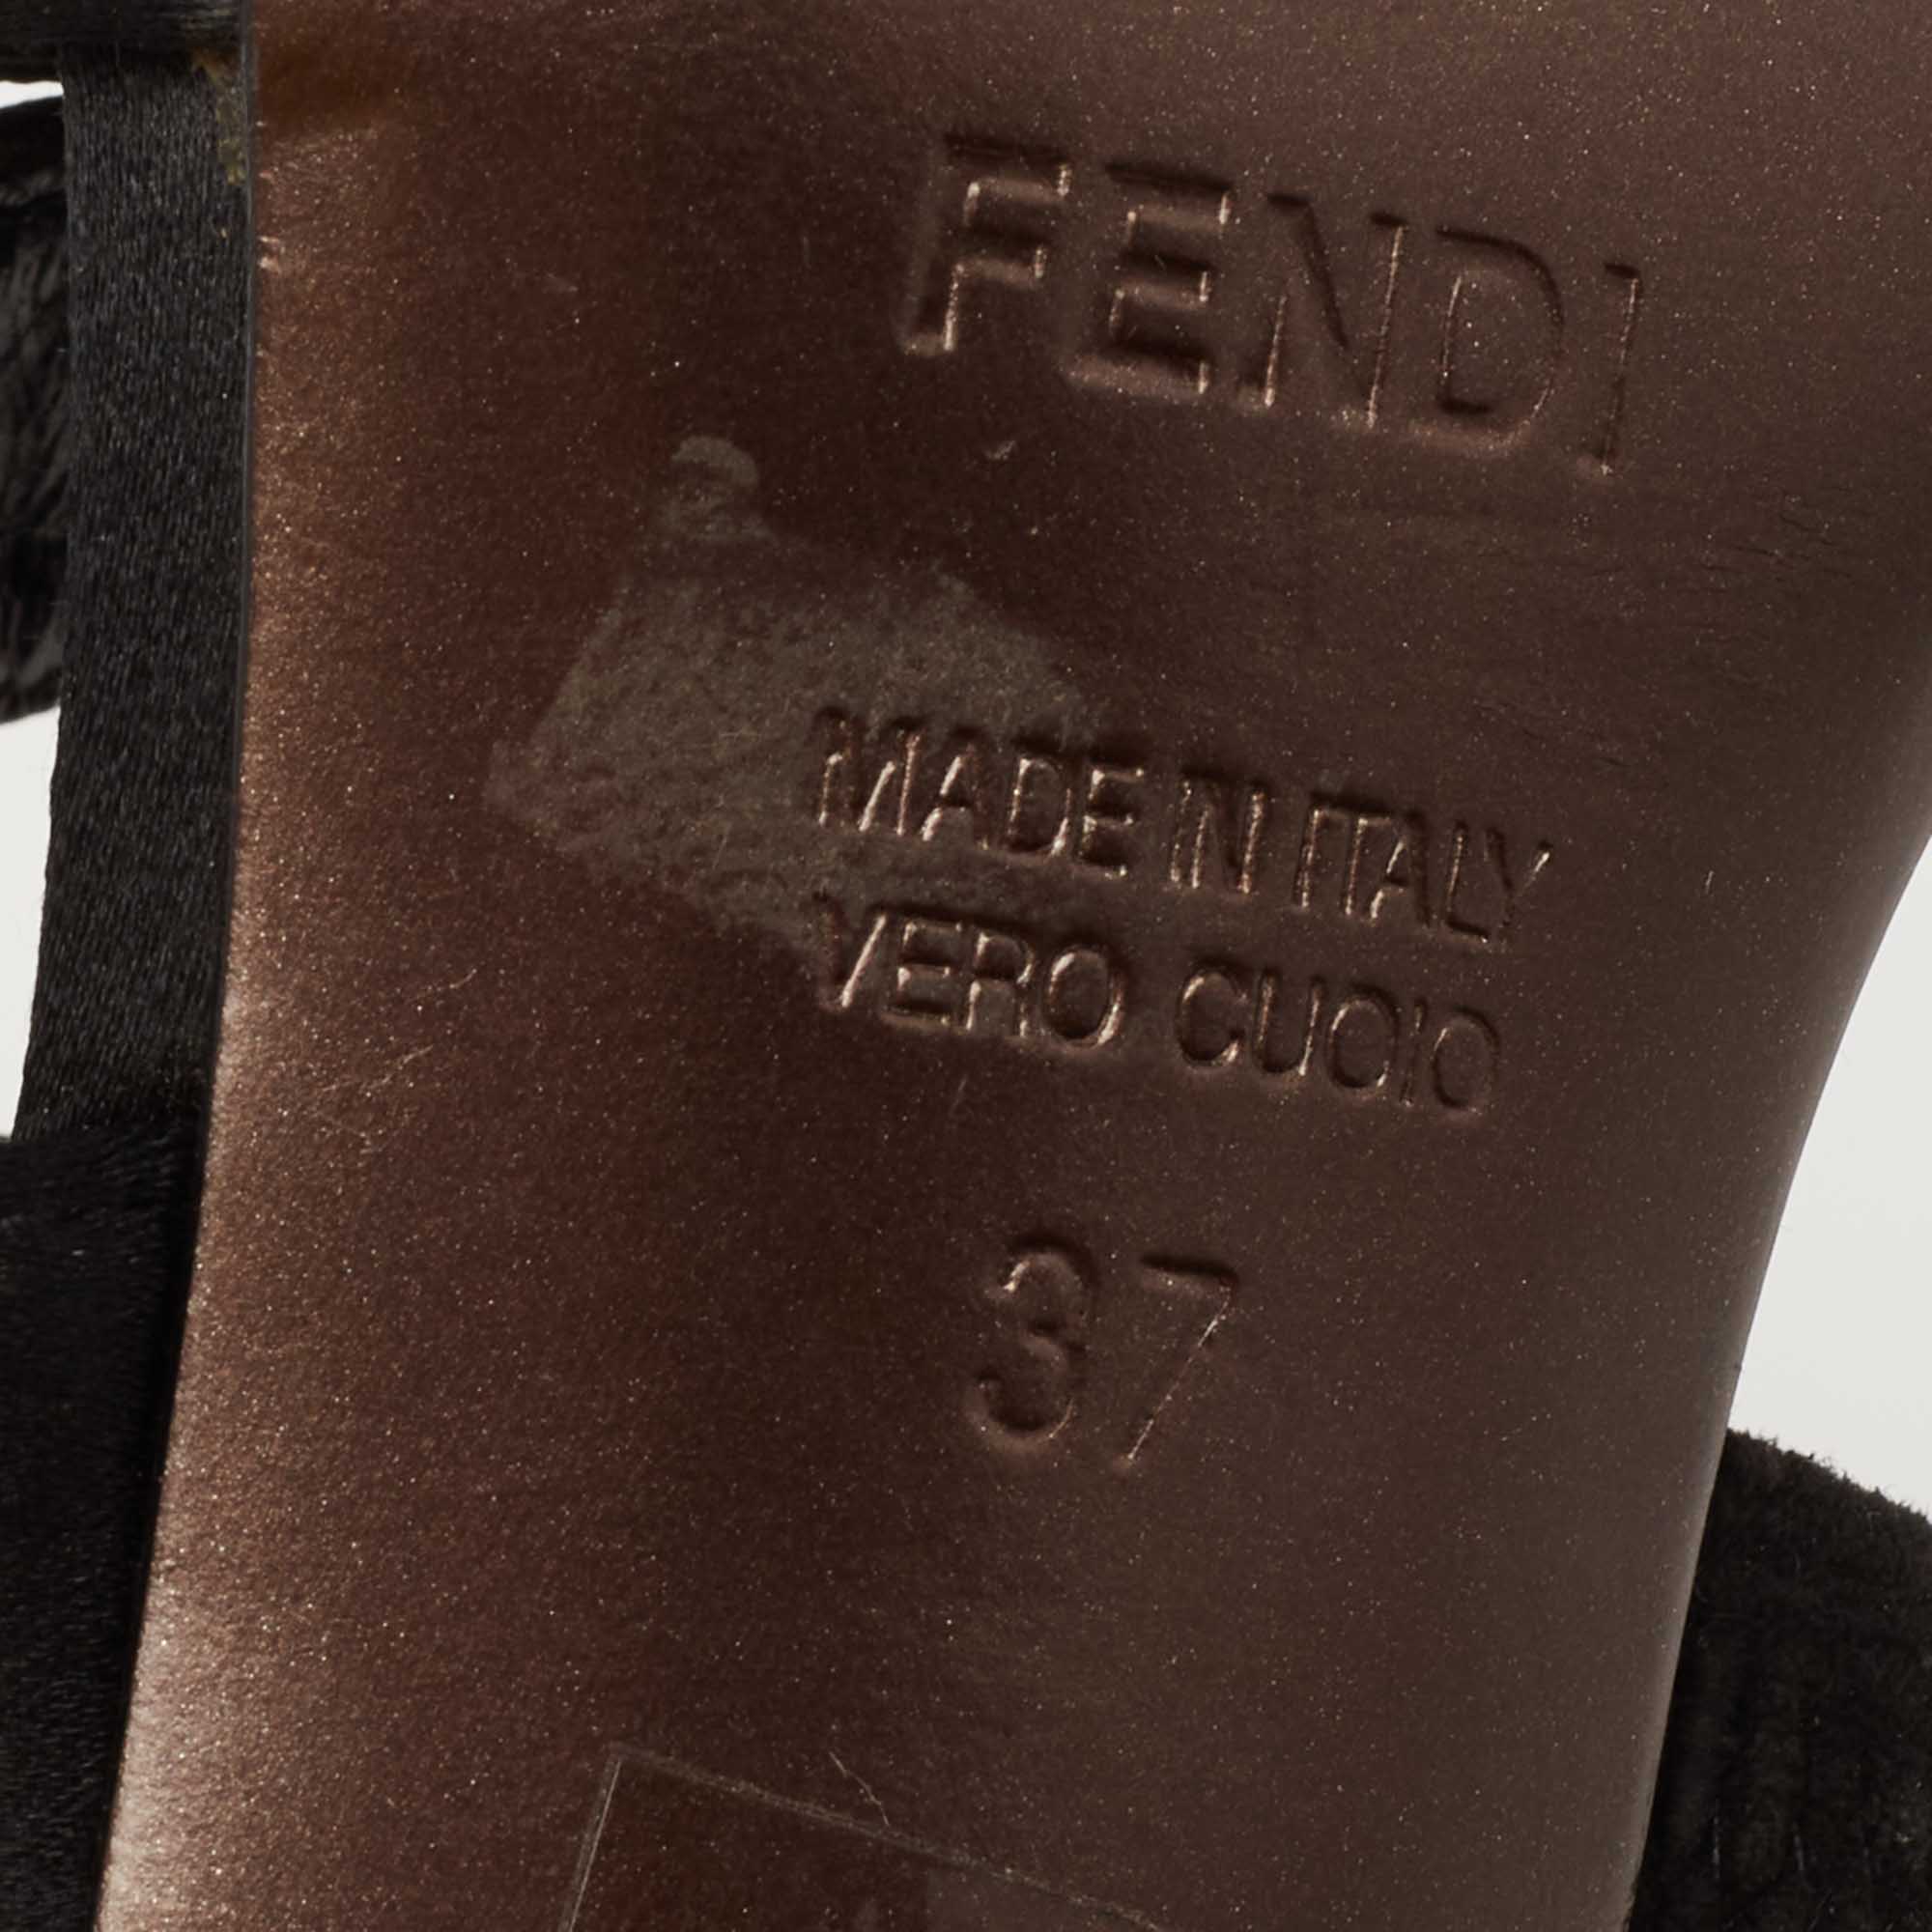 Fendi Black Satin  Criss Cross Ankle Strap Sandals Size 37